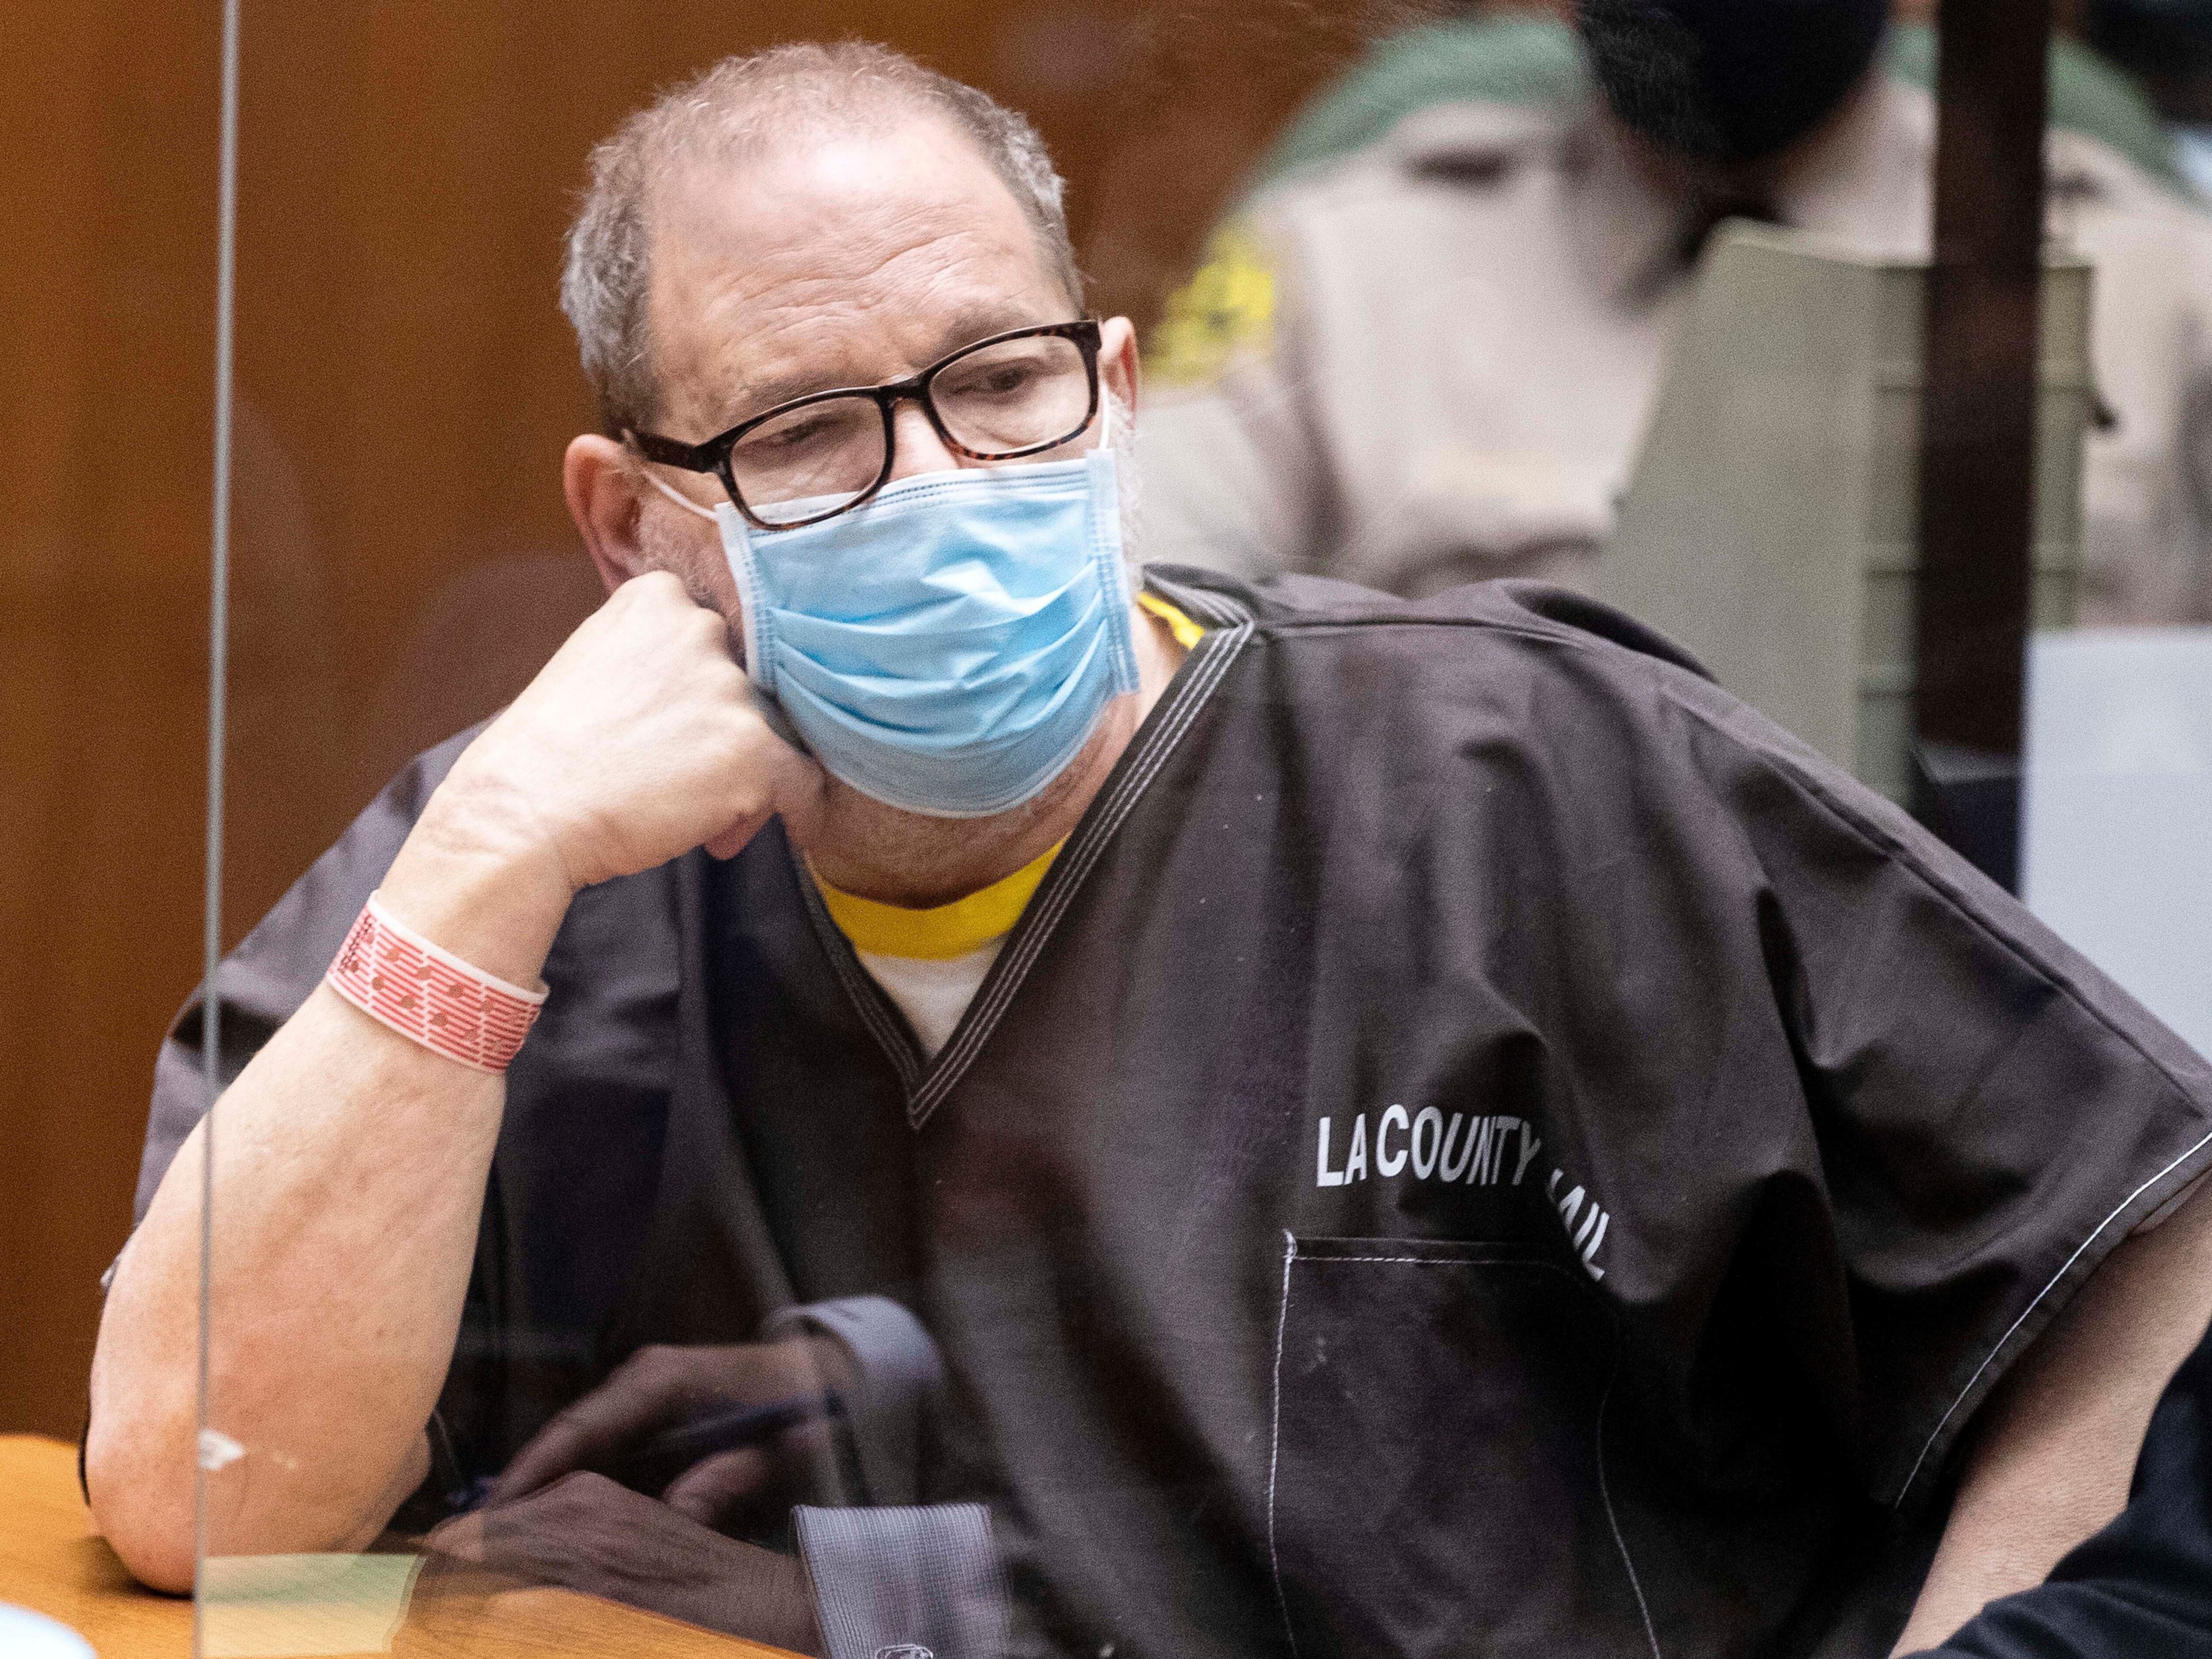 Weinstein returns to New York prison system after LA conviction